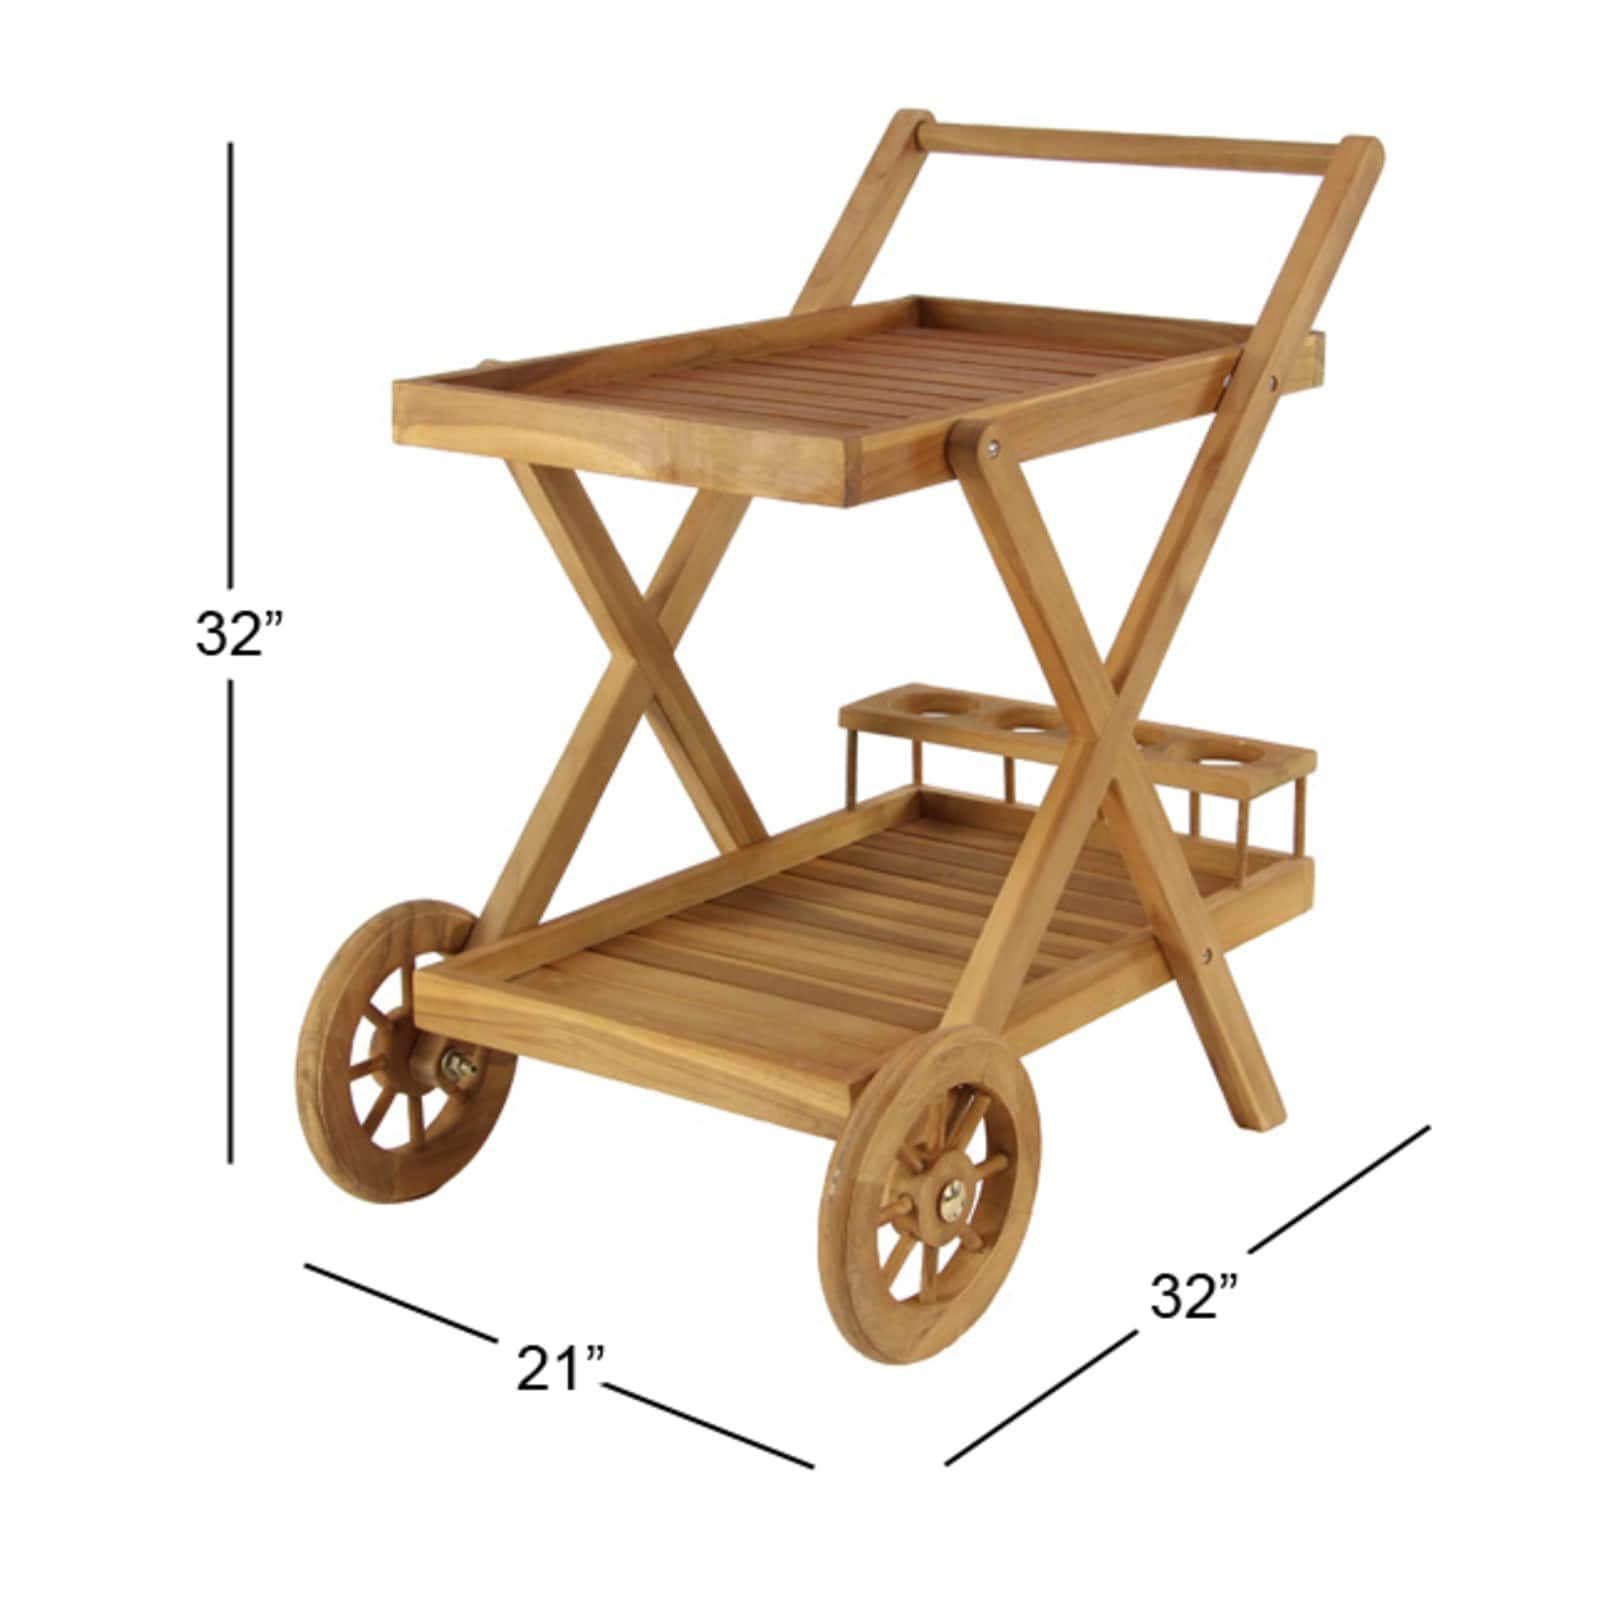 Teak wood serving cart